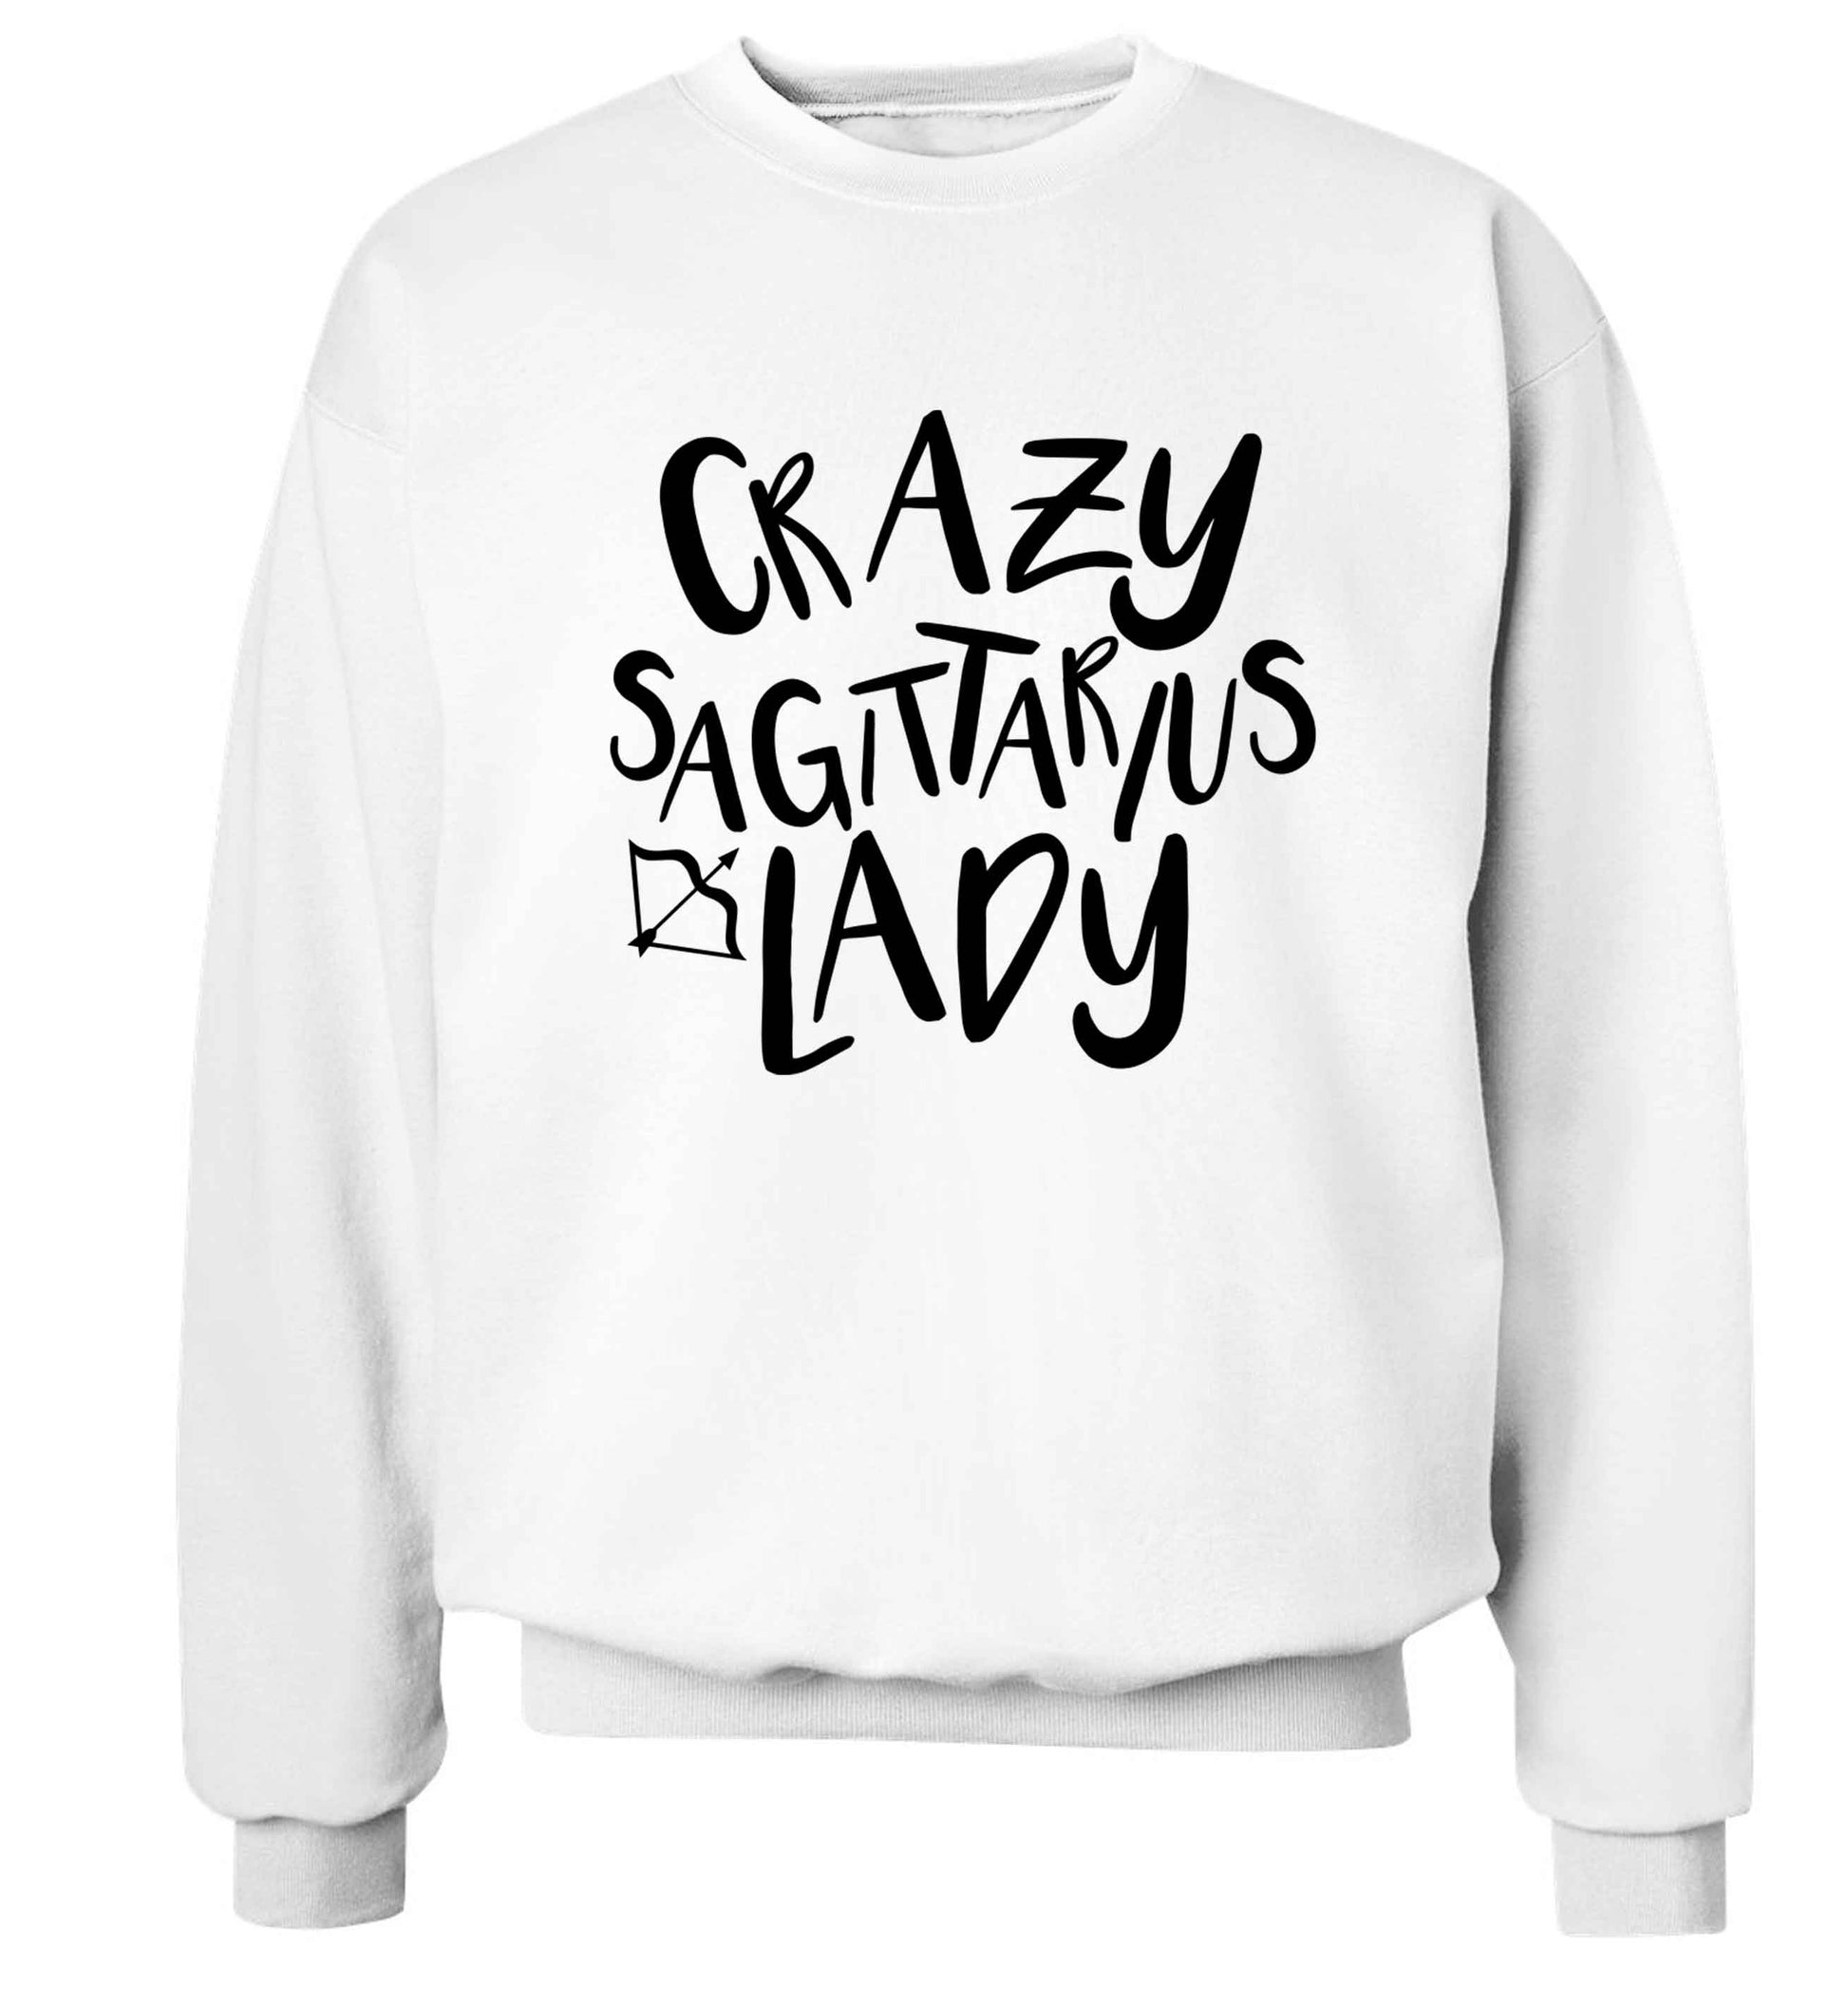 Crazy sagittarius lady Adult's unisex white Sweater 2XL